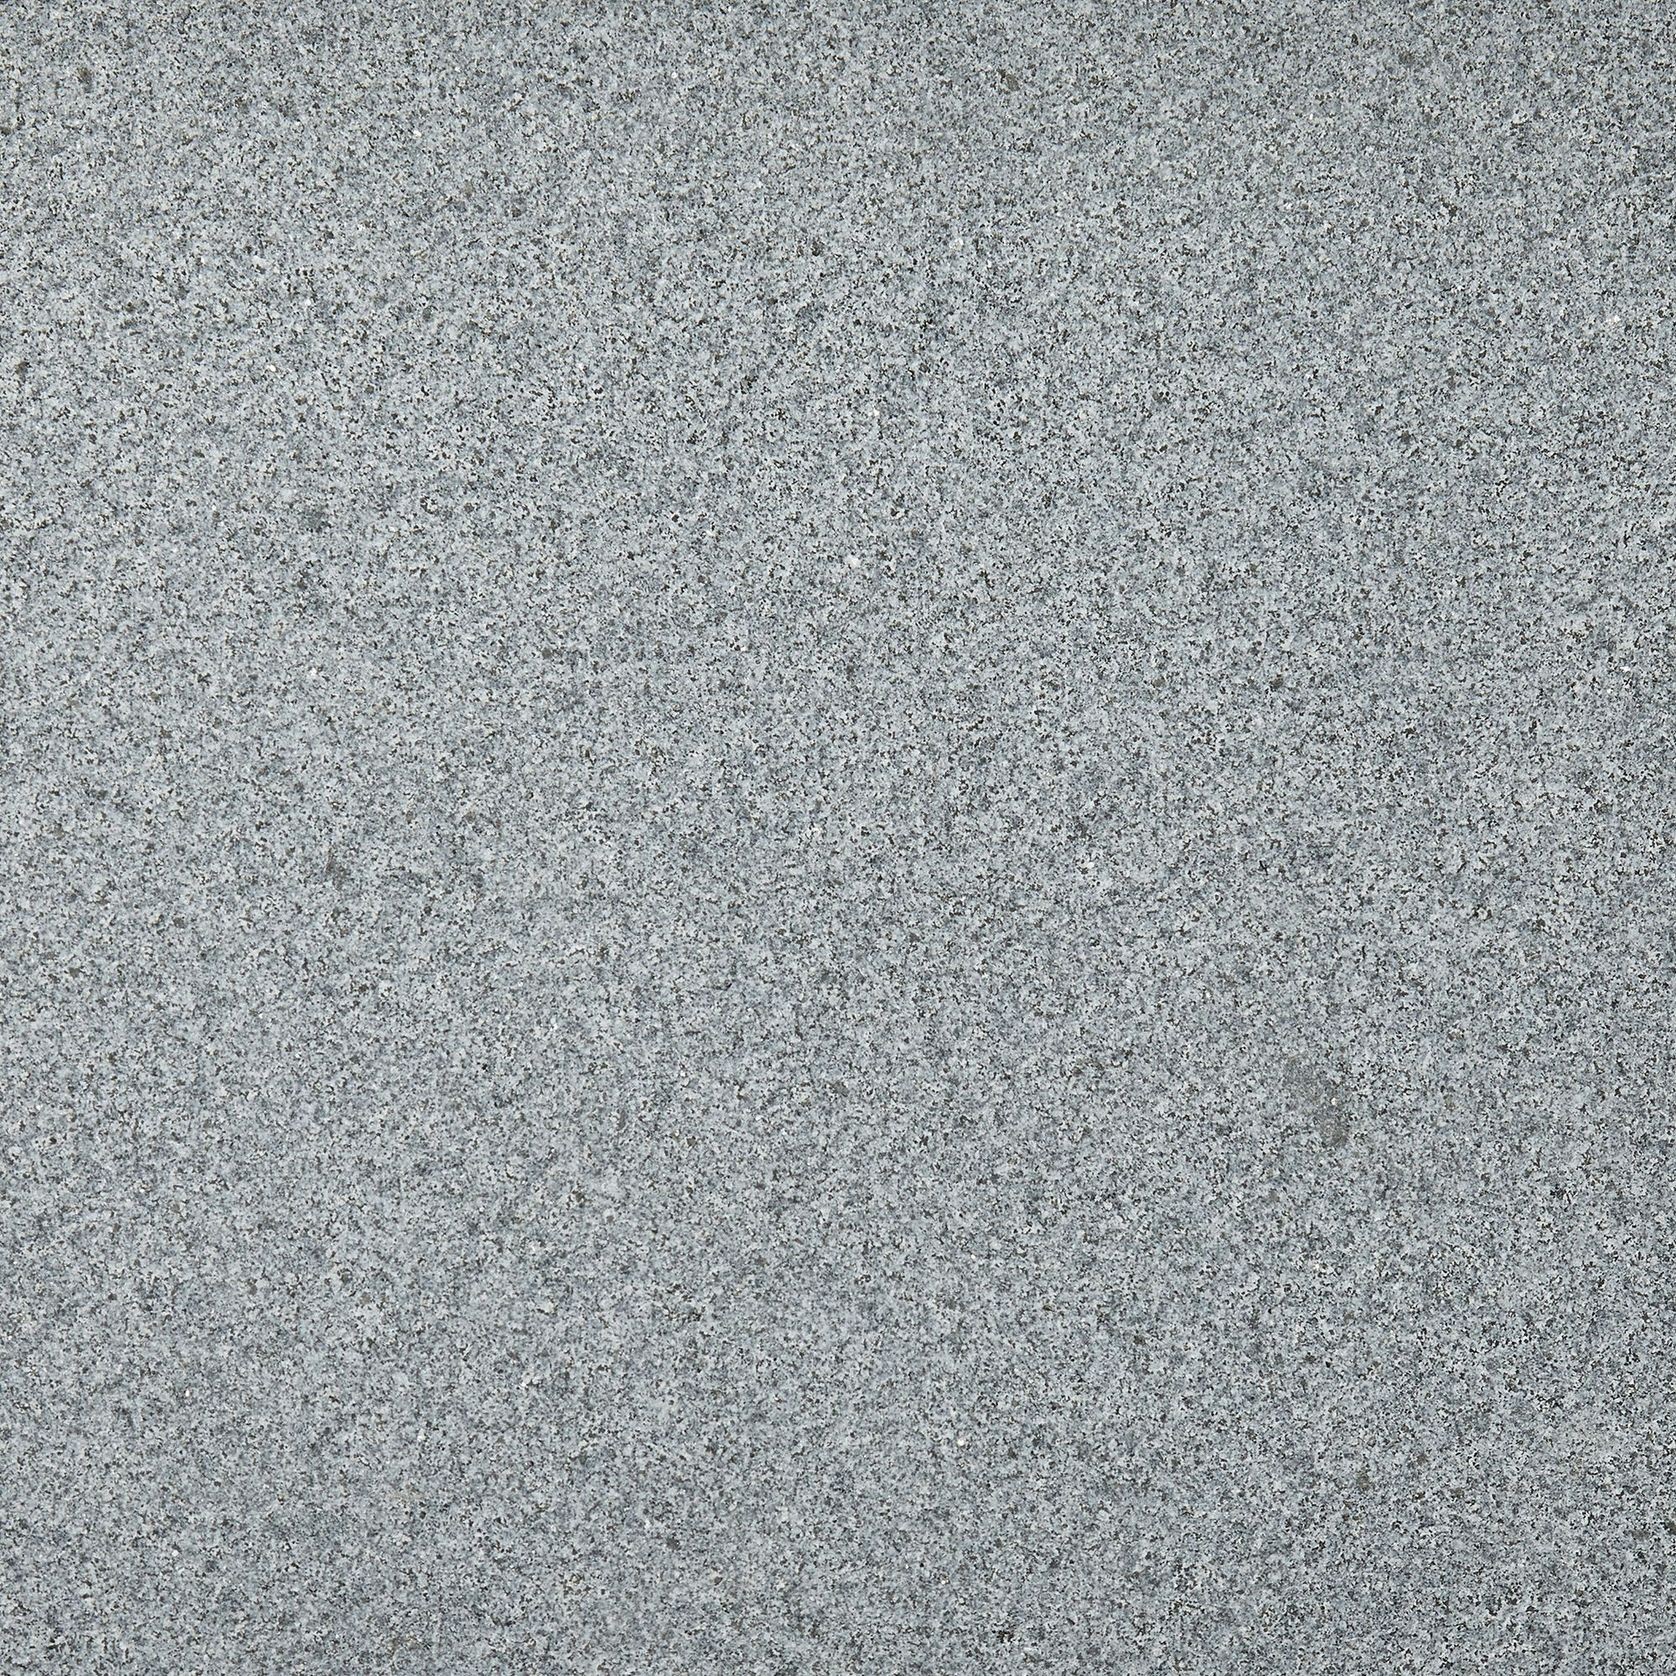 Silhouette Granite gallery detail image